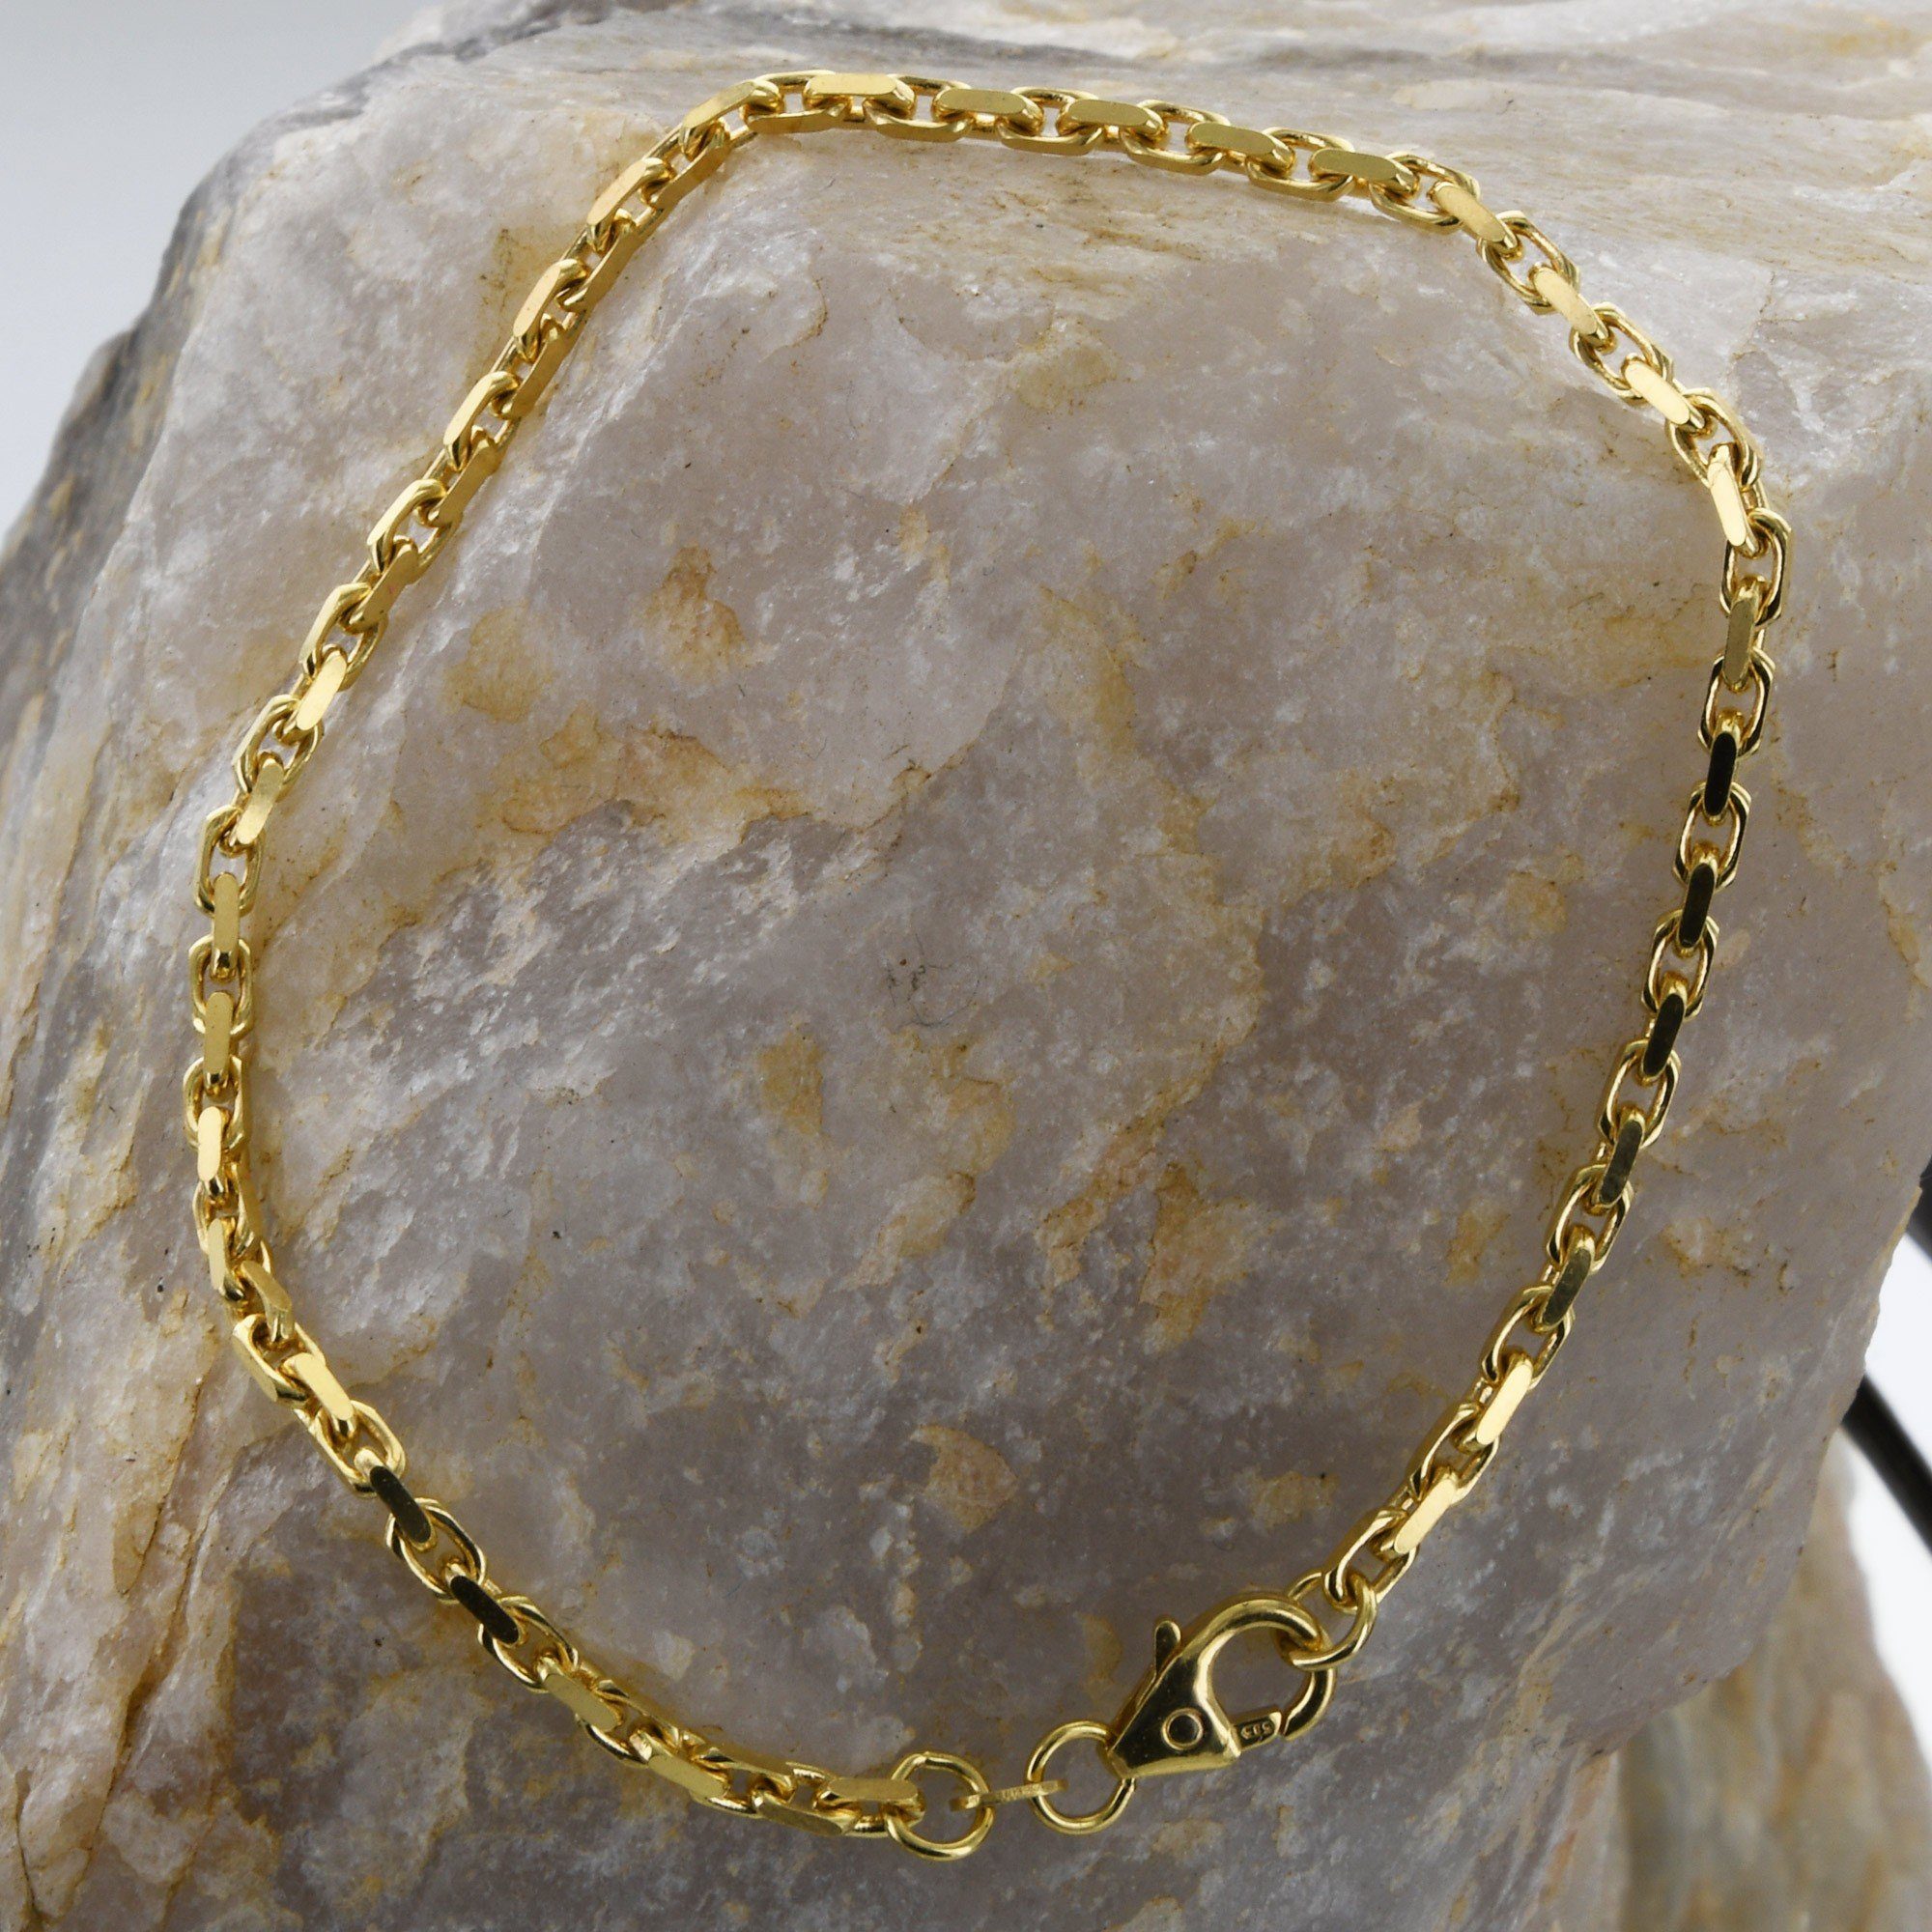 HOPLO Goldarmband Ankerkette diamantiert Länge 18,5cm - Breite 2,0mm - 333-8 Karat Gold